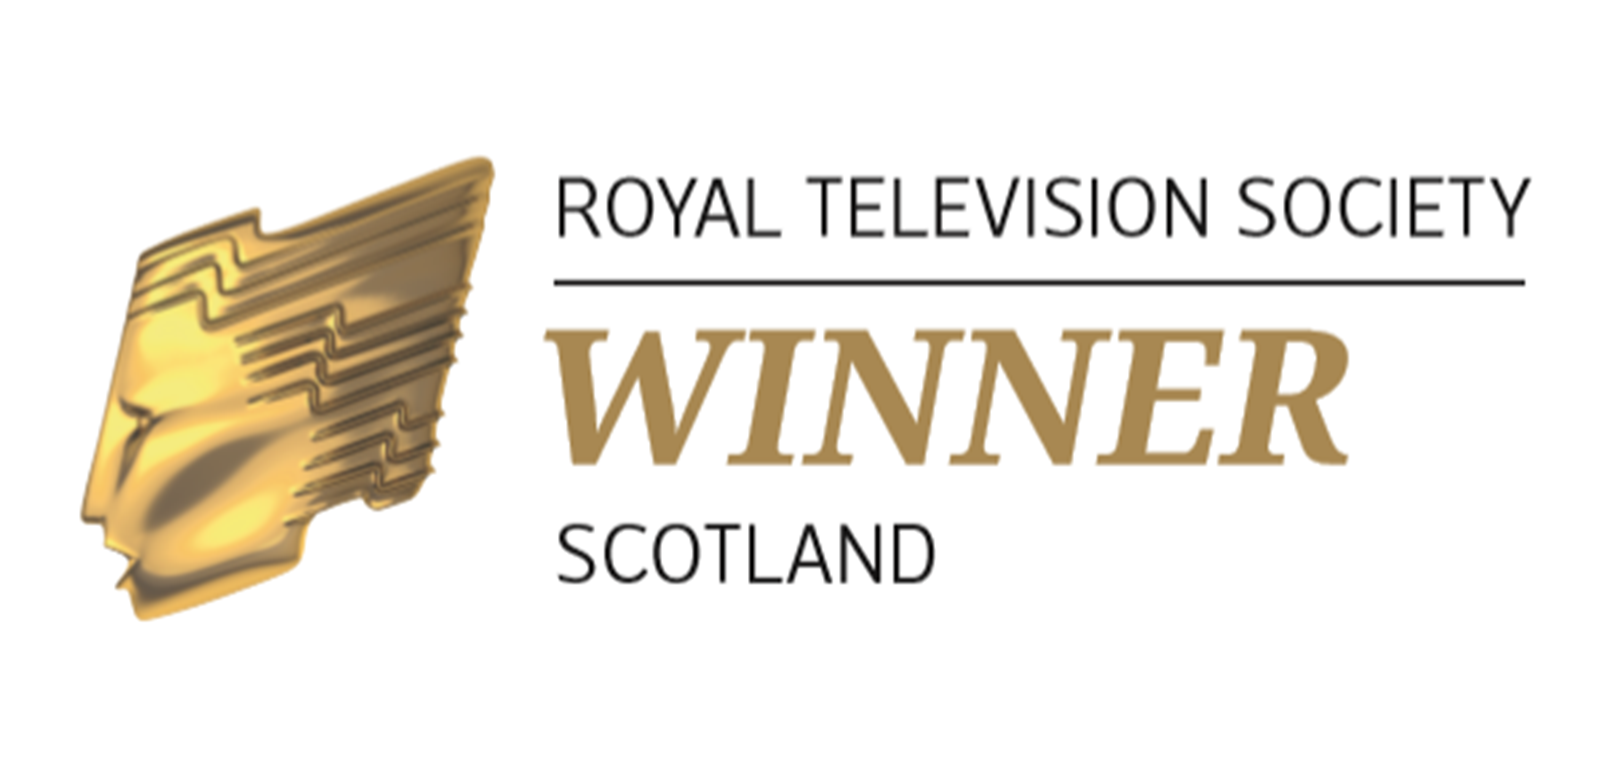 Firecracker Scotland and Sunset+Vine win at RTS Awards 2019